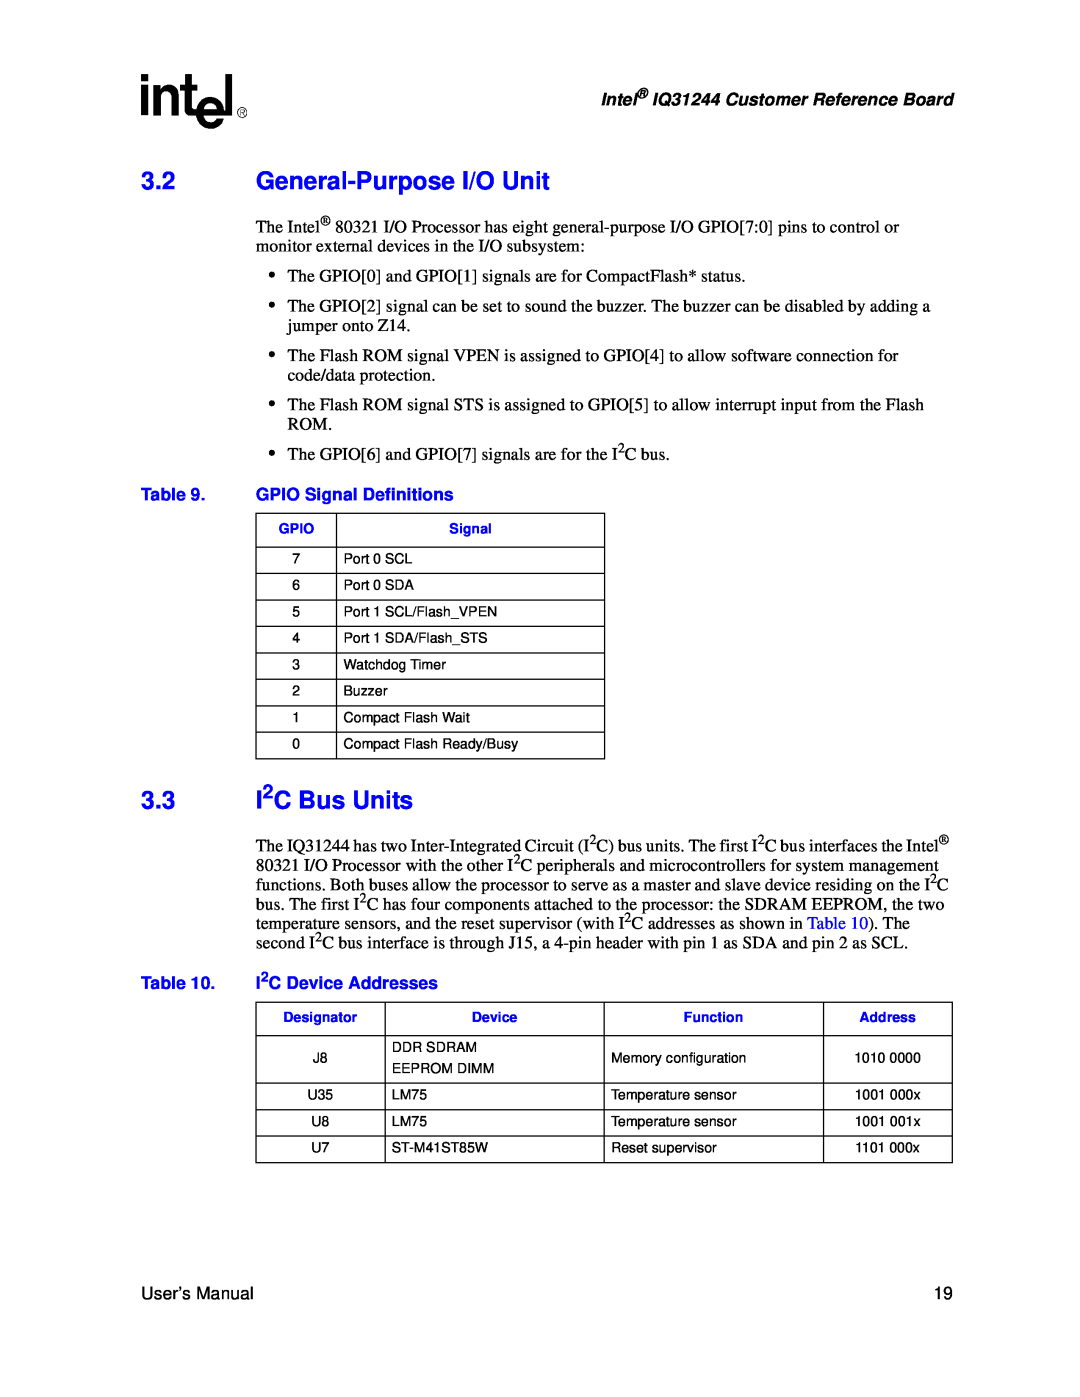 Intel IQ31244 user manual 3.2General-PurposeI/O Unit, 3.3I2C Bus Units, GPIO Signal Definitions, I2C Device Addresses 